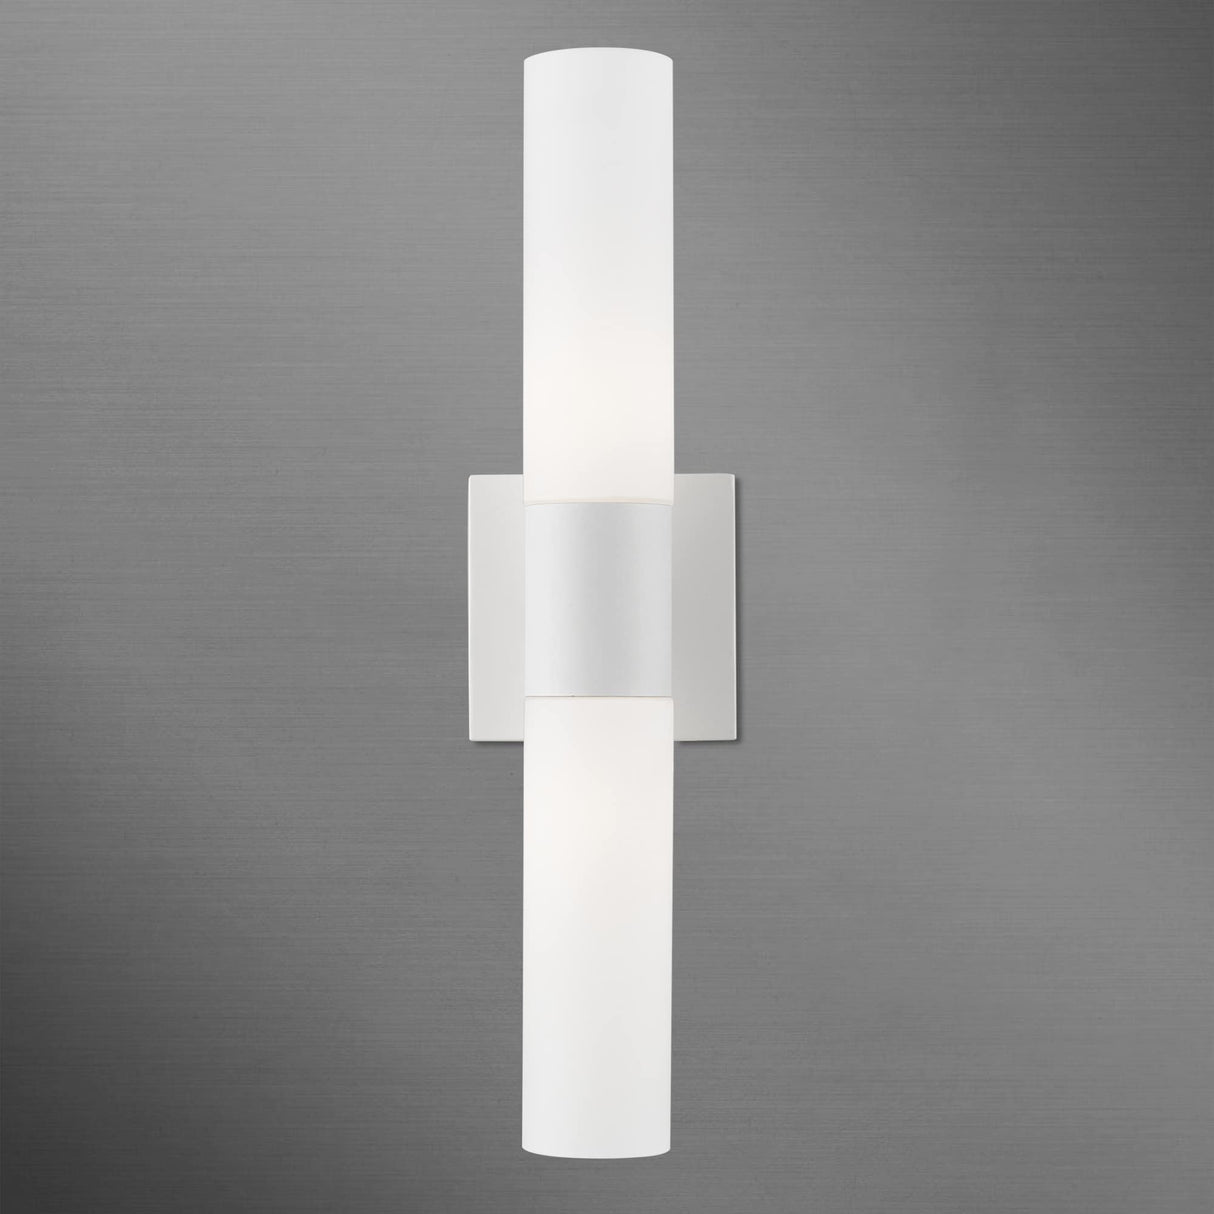 Livex Lighting 10102-03 Aero 2 Light ADA Vanity Sconce, White with Brushed Nickel Accent, 4.5 x 17.75